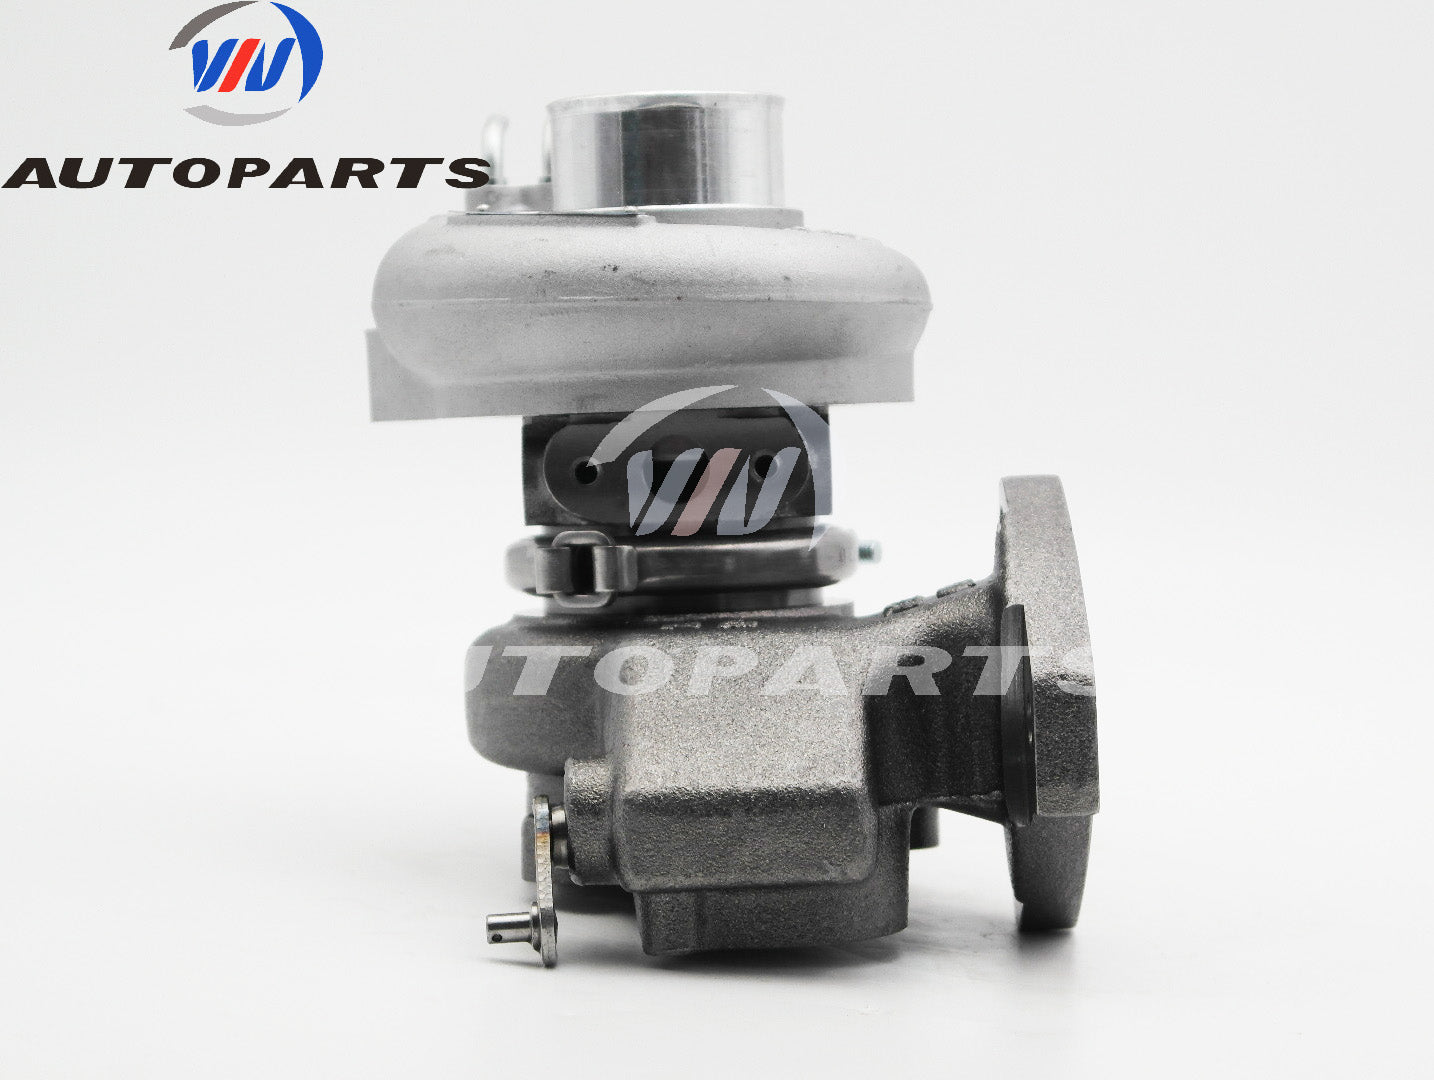 VIV AUTOPARTS Turbocharger 49177-01502 for Mitsubishi L200, Pajero II 2.5L Diesel Engine